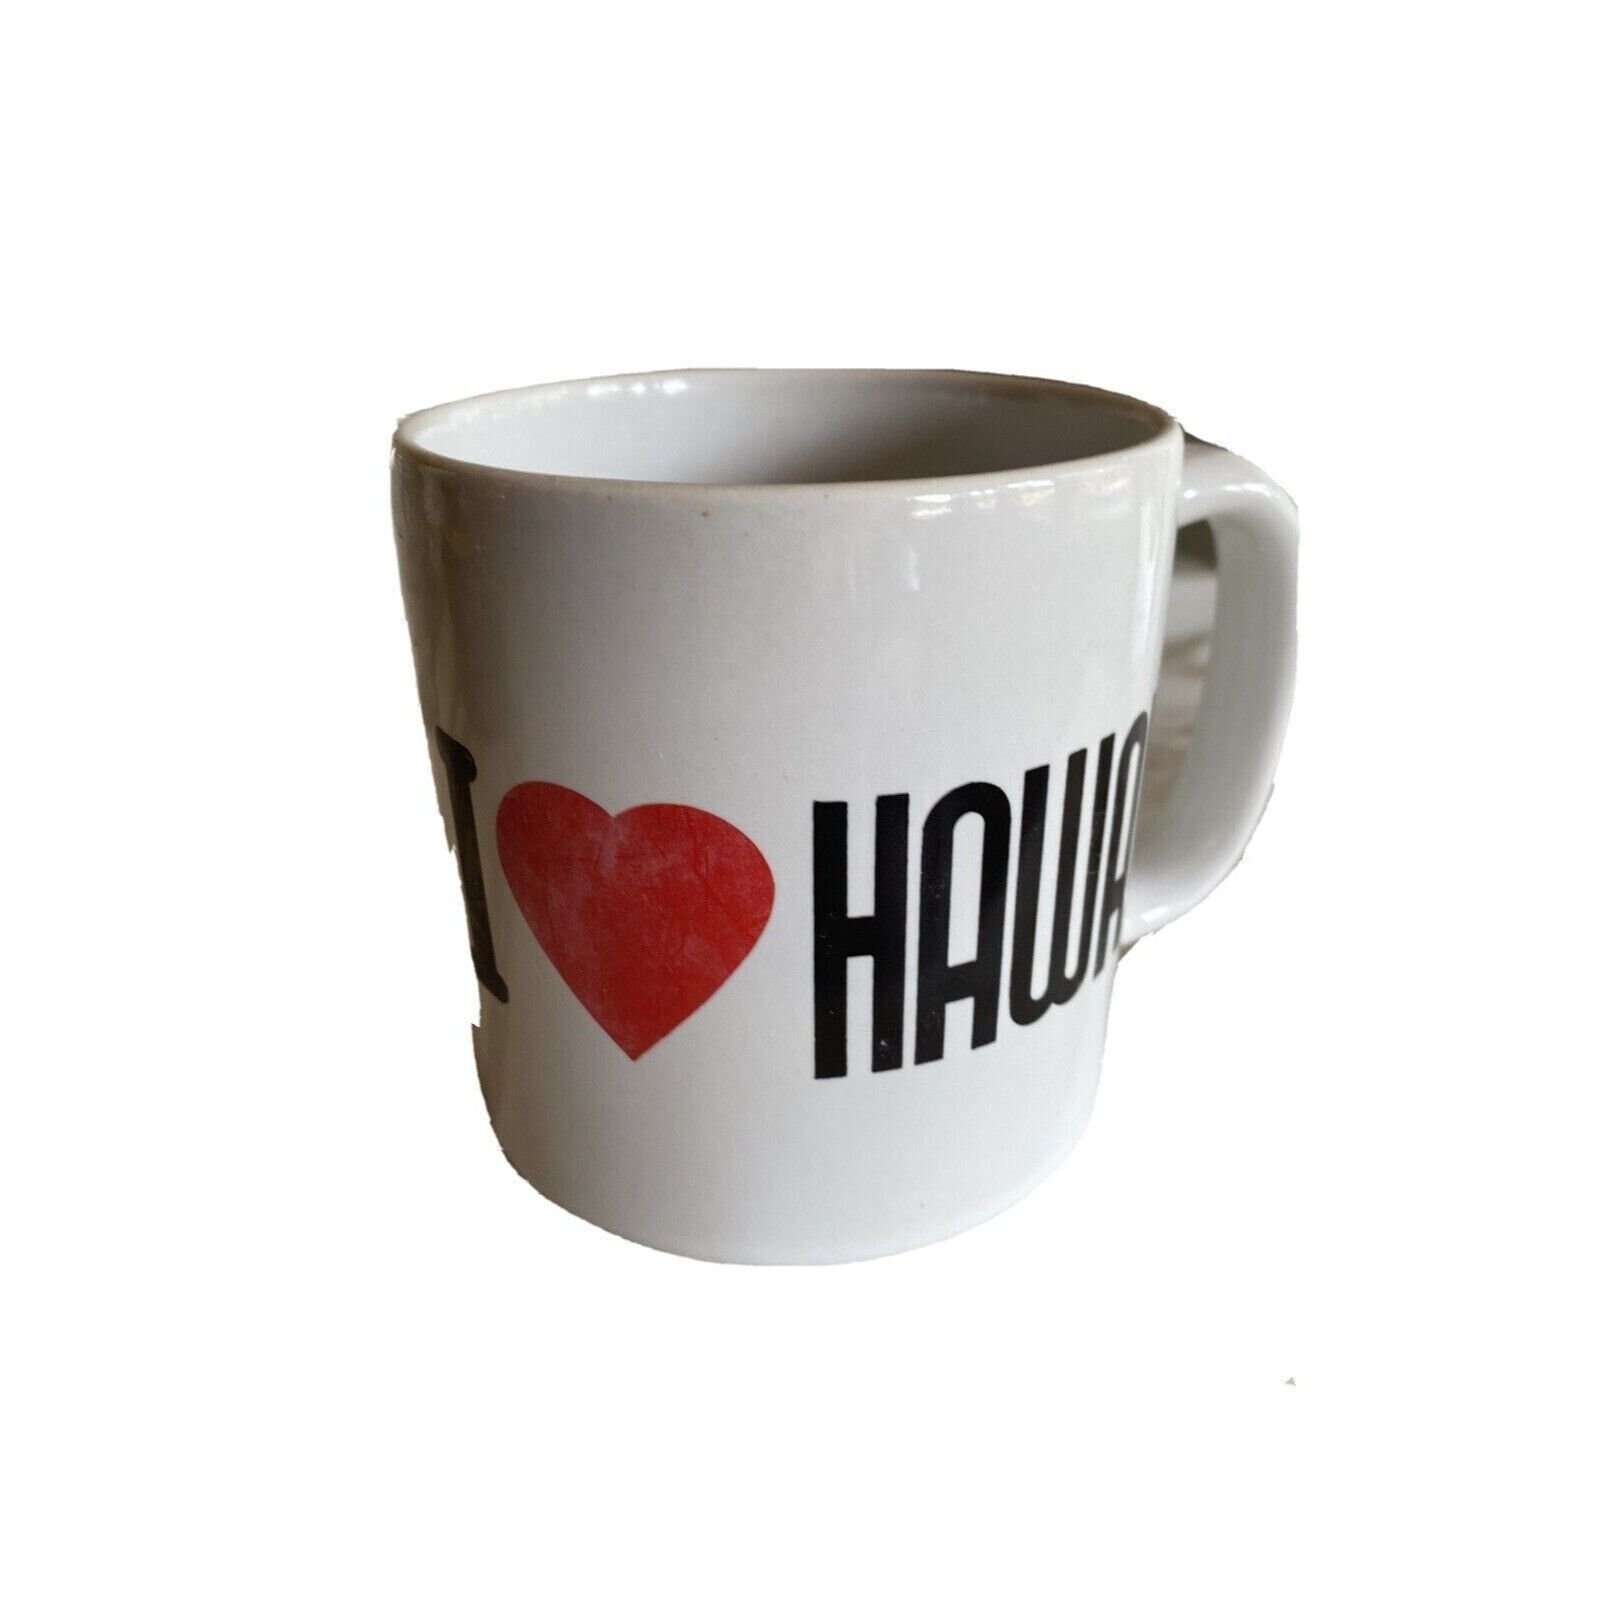 Vintage 1990's I Heart Hawaii Love Ceramic Mug Cup Made in Korea